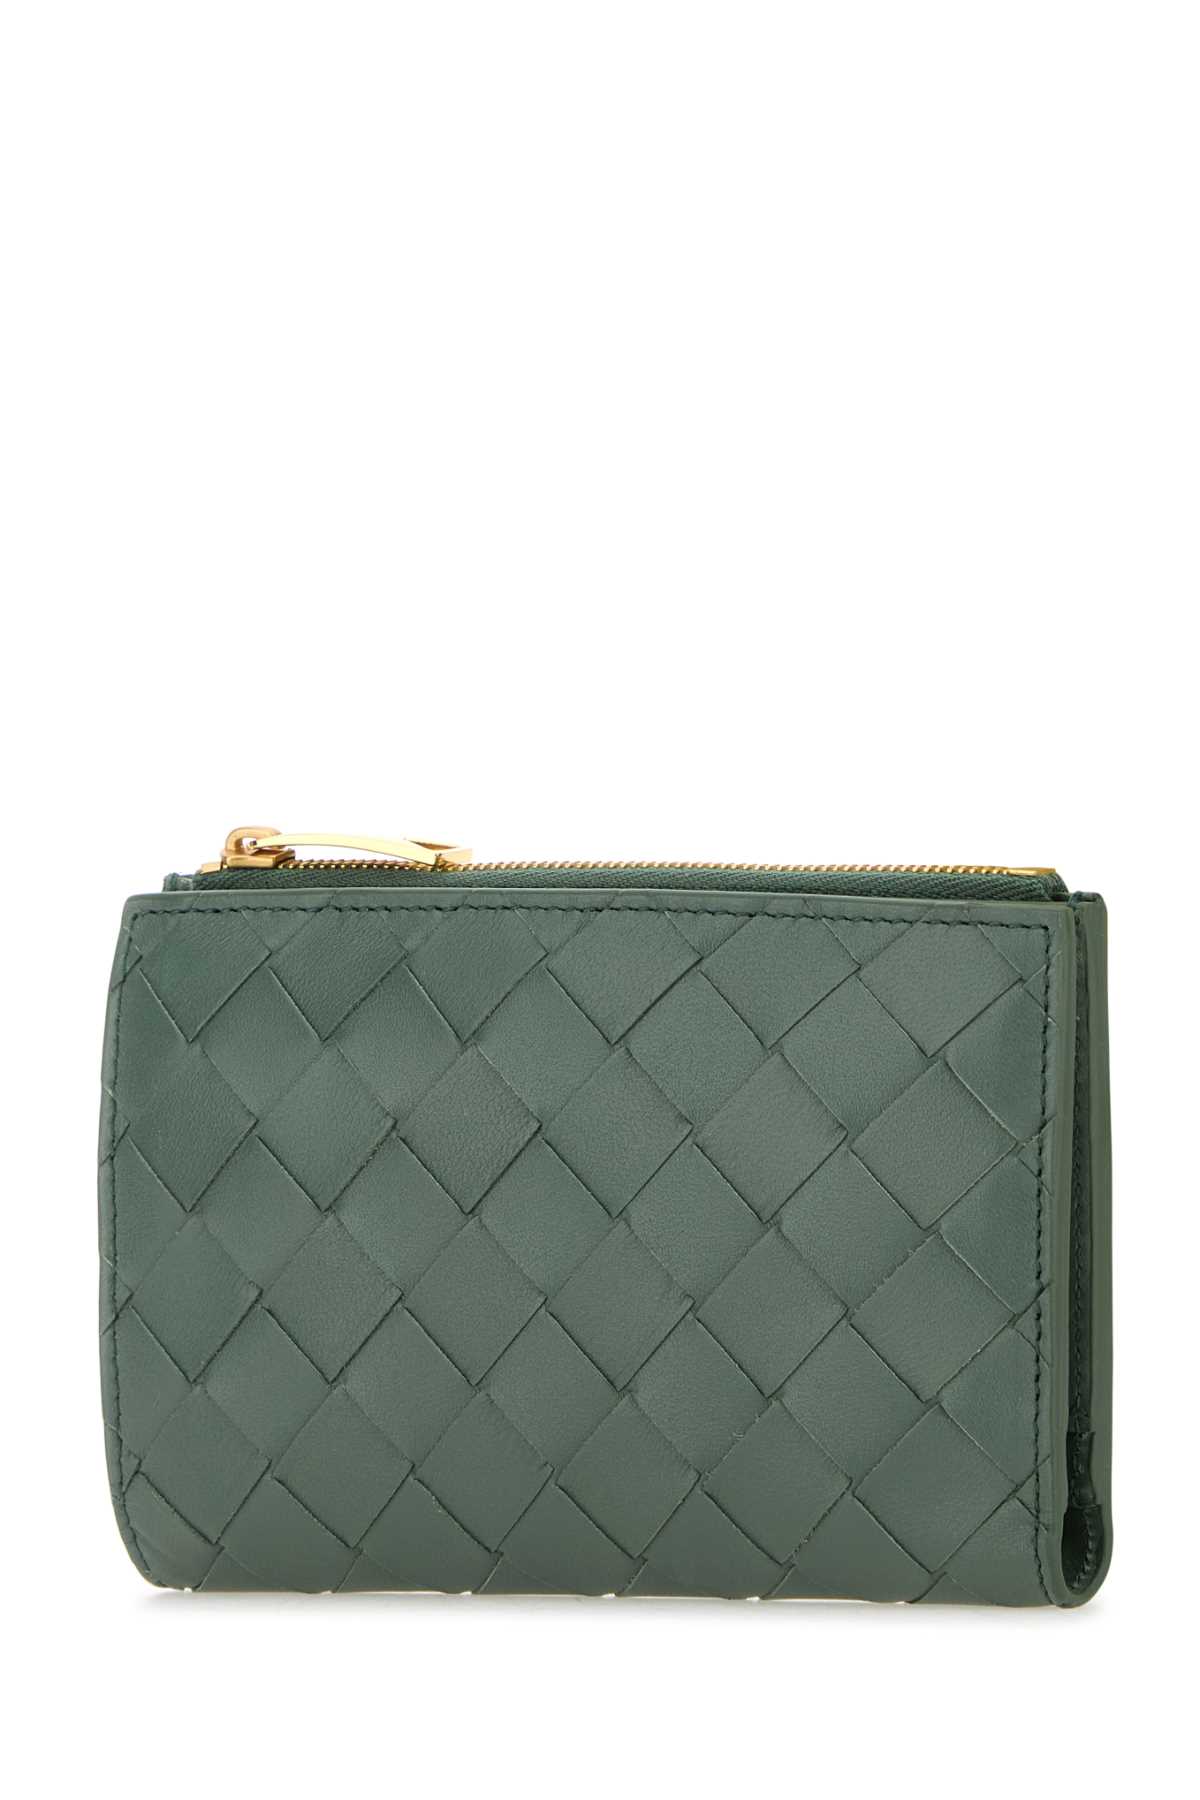 Bottega Veneta Sage Green Nappa Leather Medium Intrecciato Wallet In Alohe